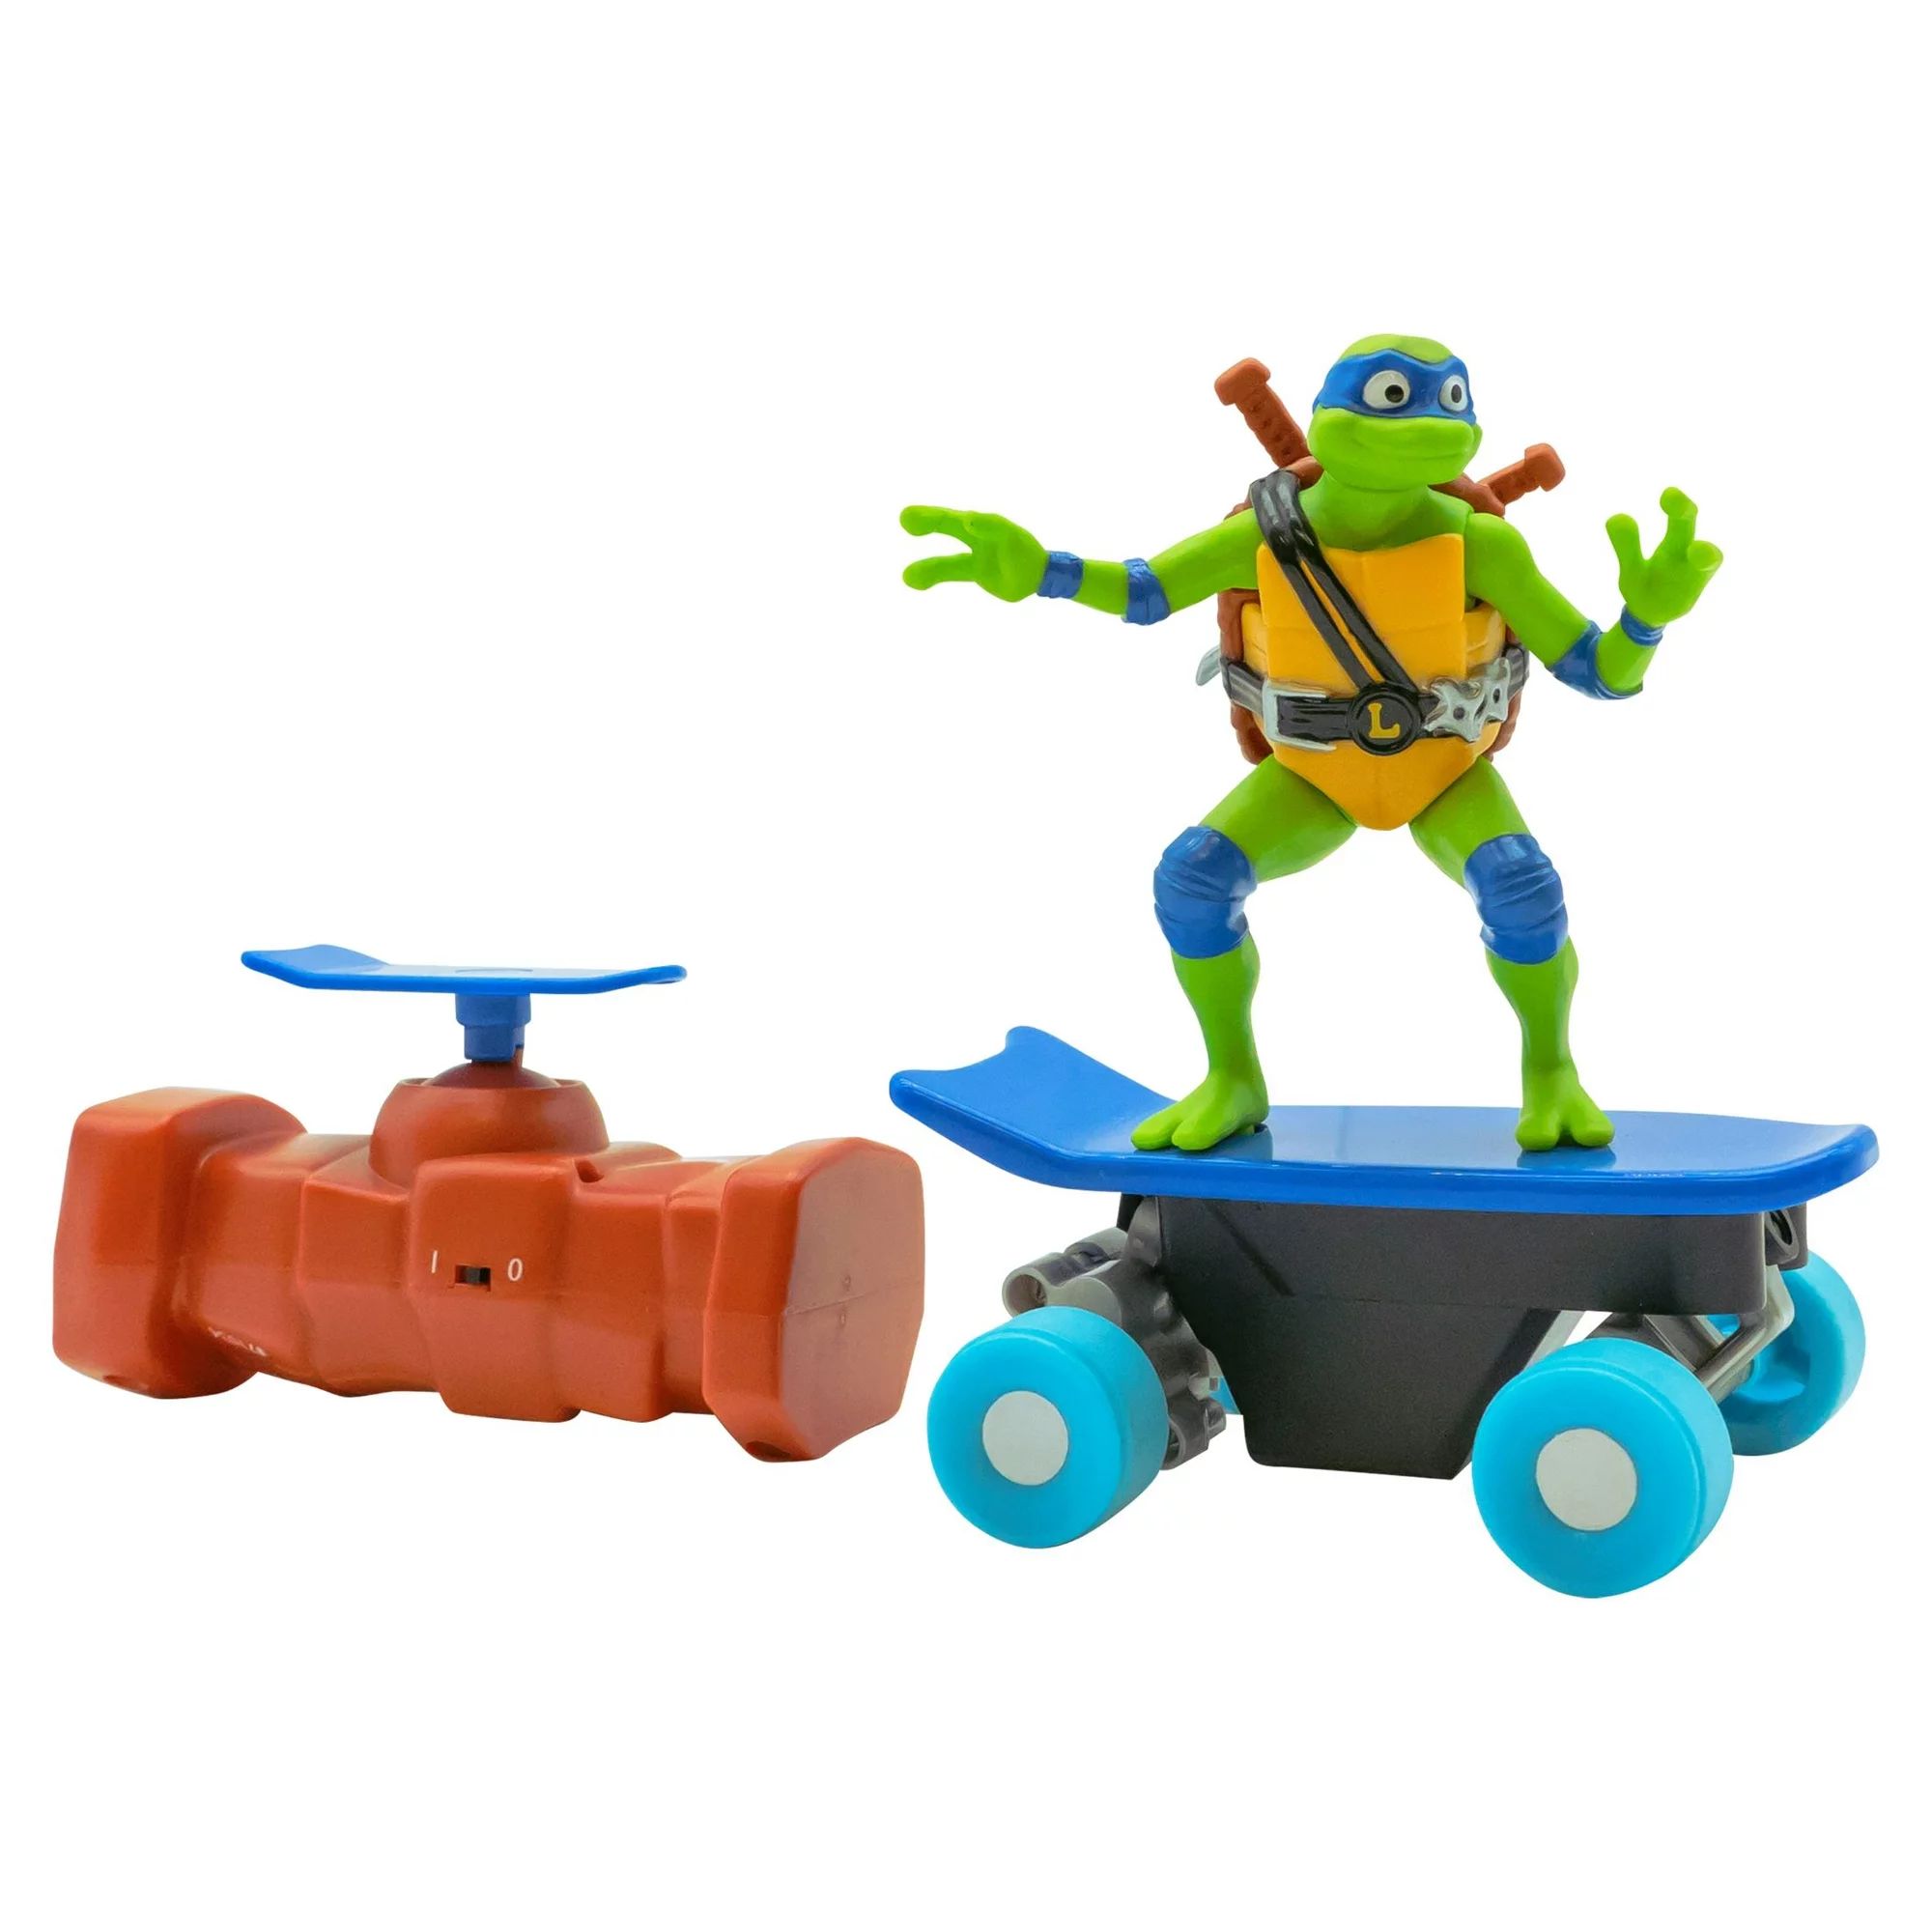 Teenage Mutant Ninja Turtles Half Pipe Remote Control Leonardo 2 piece Green & Blue | Walmart (US)